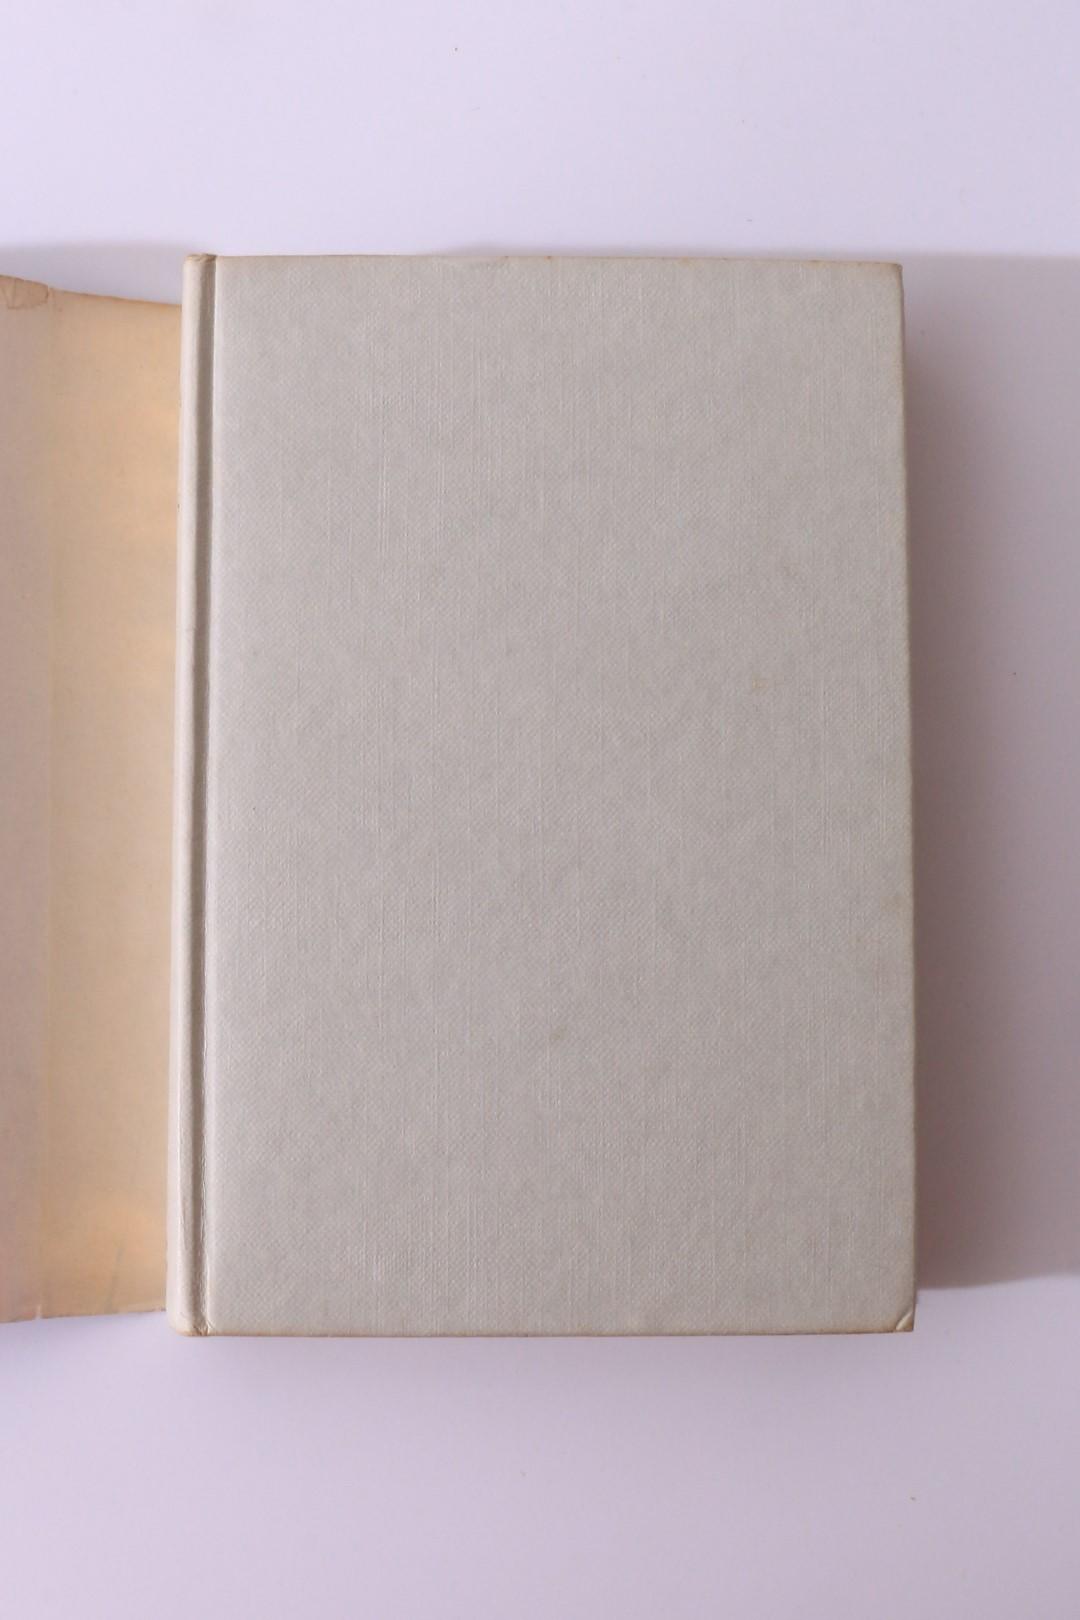 Philip K. Dick - The Three Stigmata of Palmer Eldritch - Jonathan Cape, 1966, First Edition.